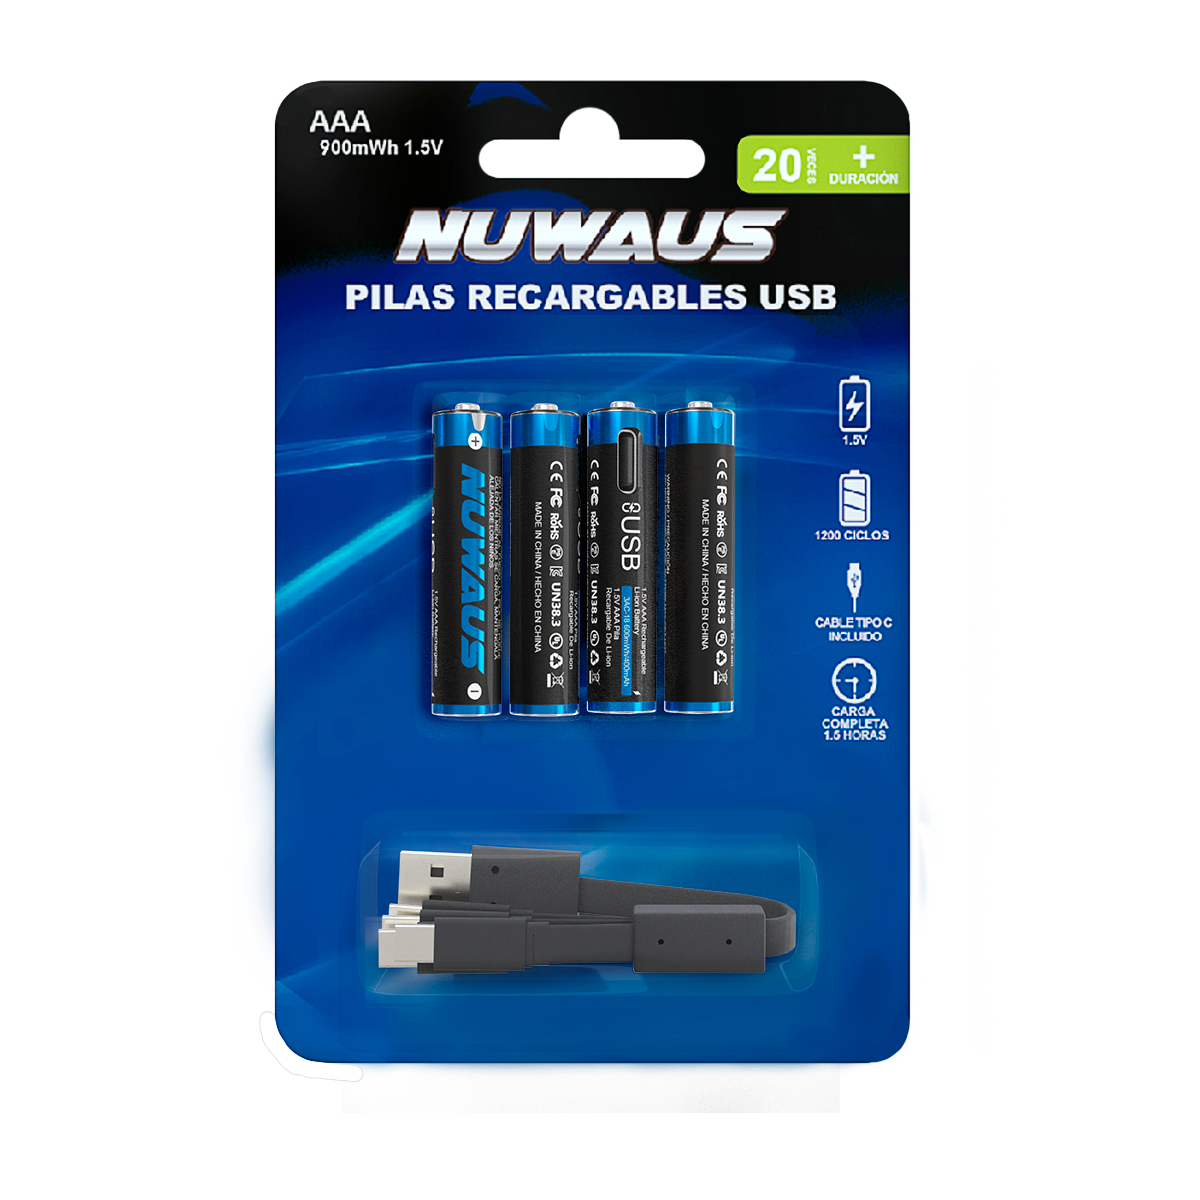 Pilas recargables Nuwaus AAA x4 unidades entrada USB-C